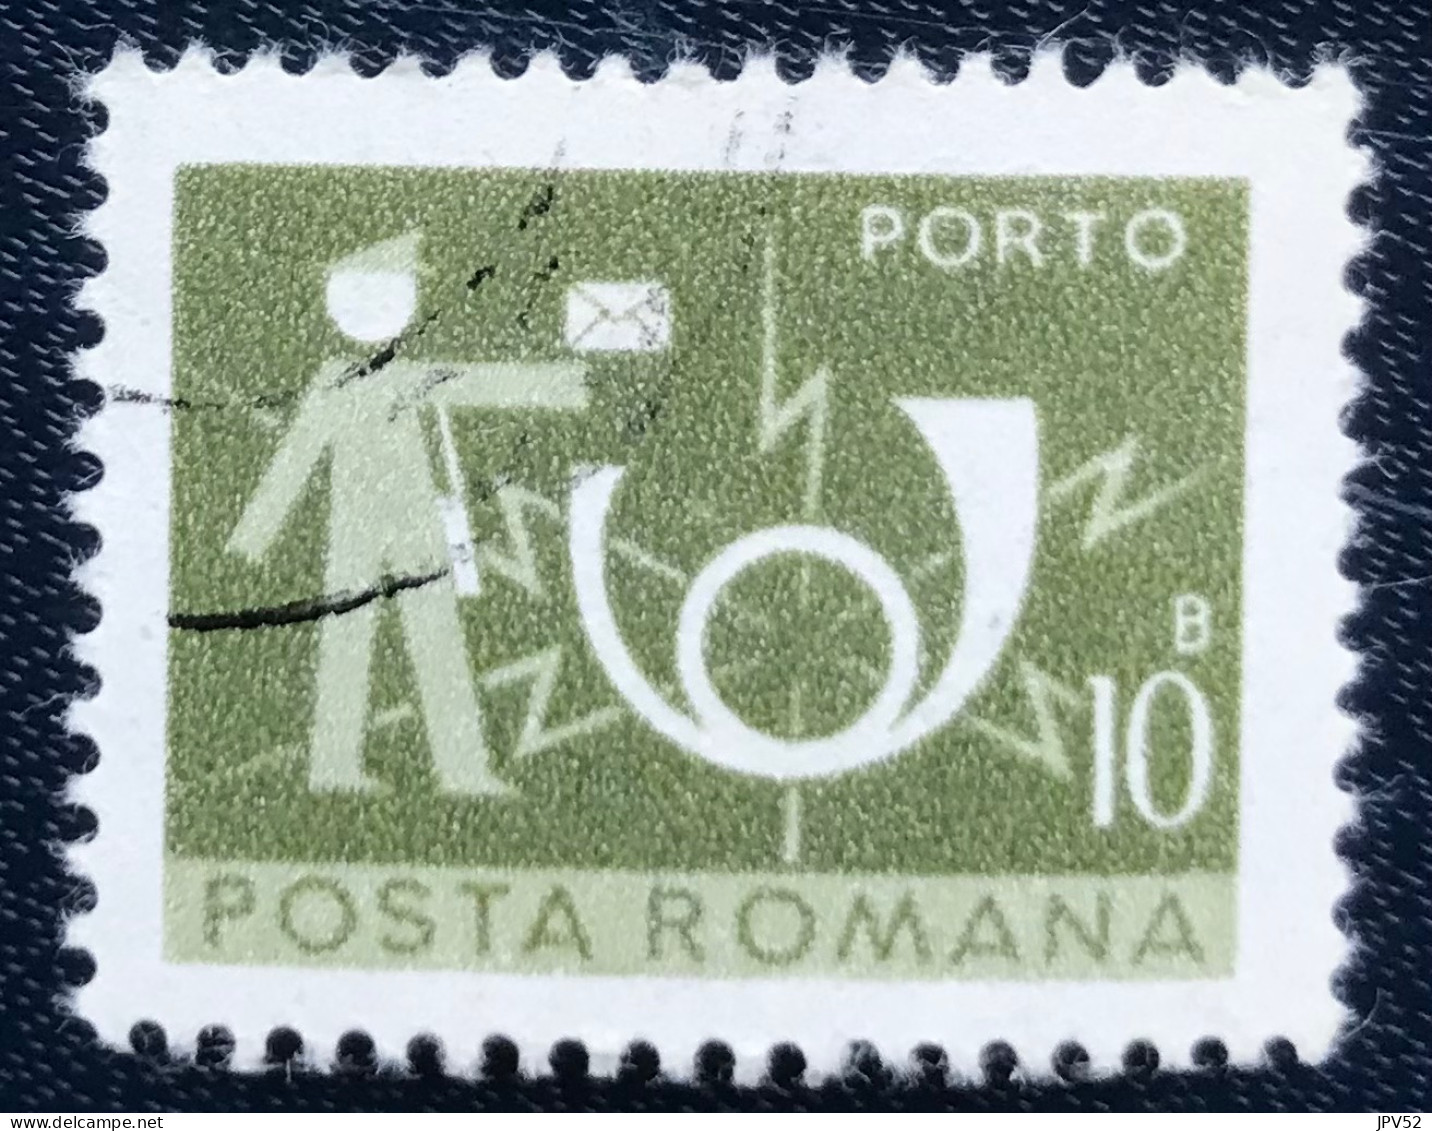 Romana - Roemenië - C14/54 - 1974 - (°)used - Michel 120 - Postbode & Posthoorn - Strafport